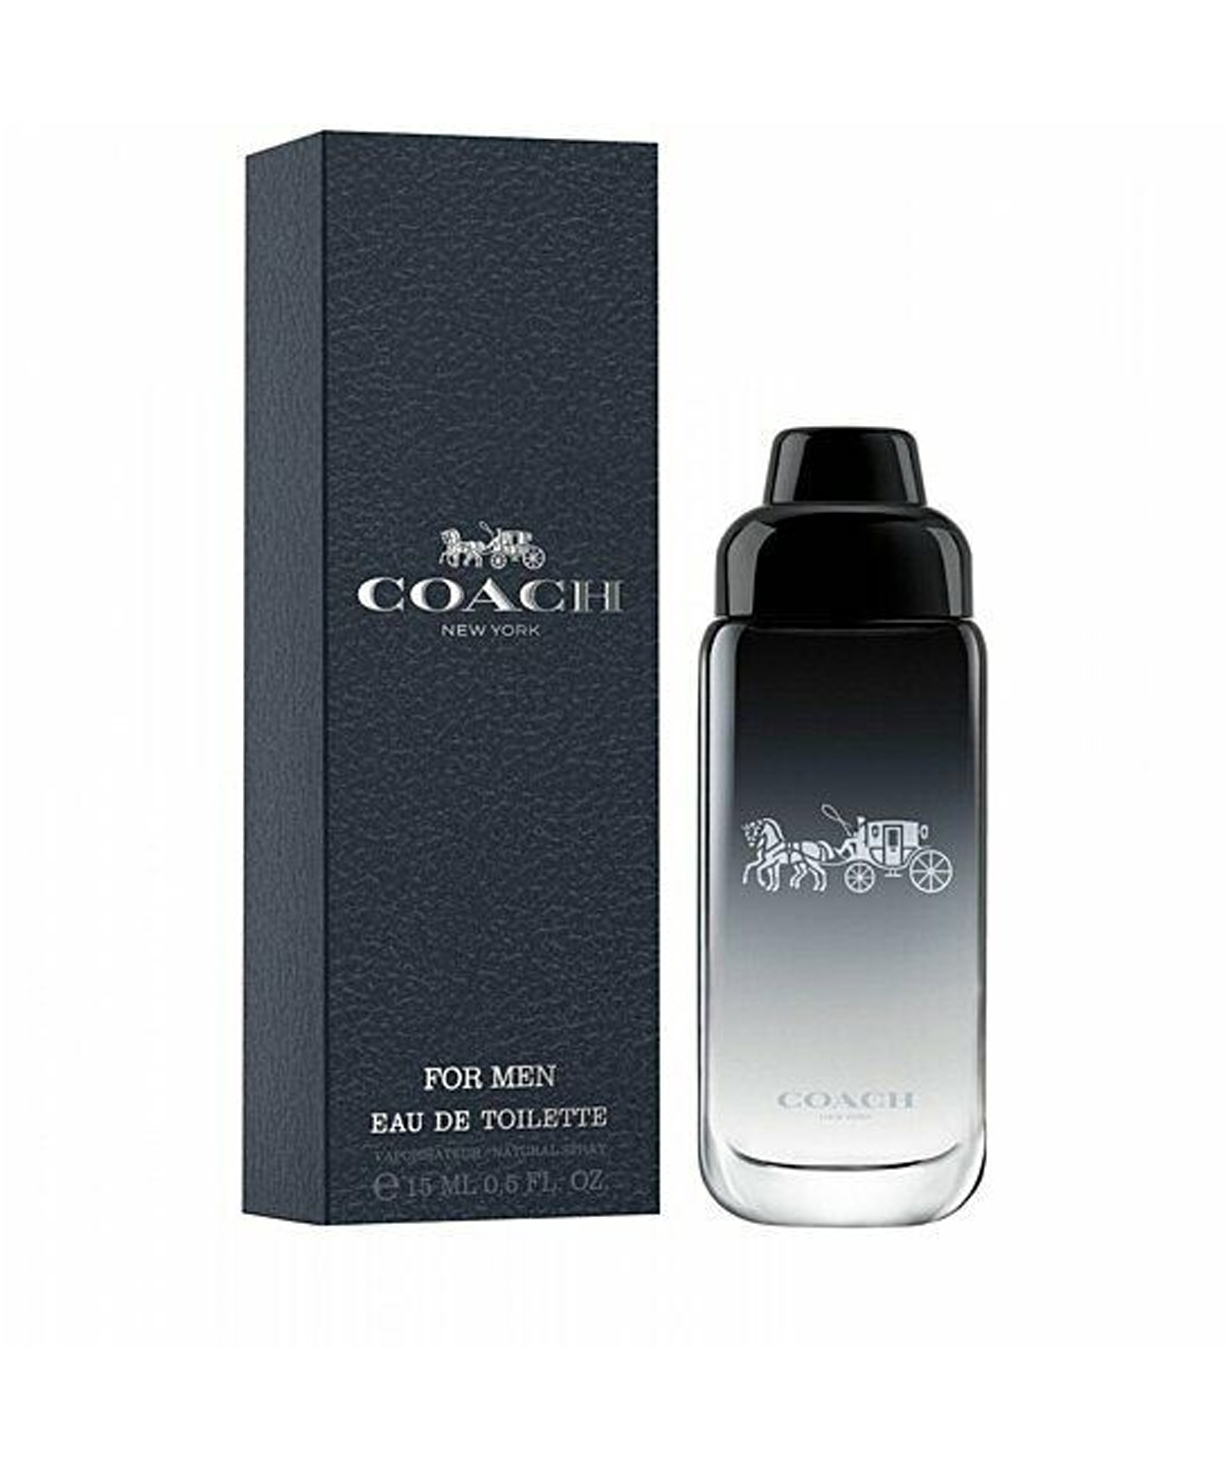 Perfume «Coach» for men, 15 ml